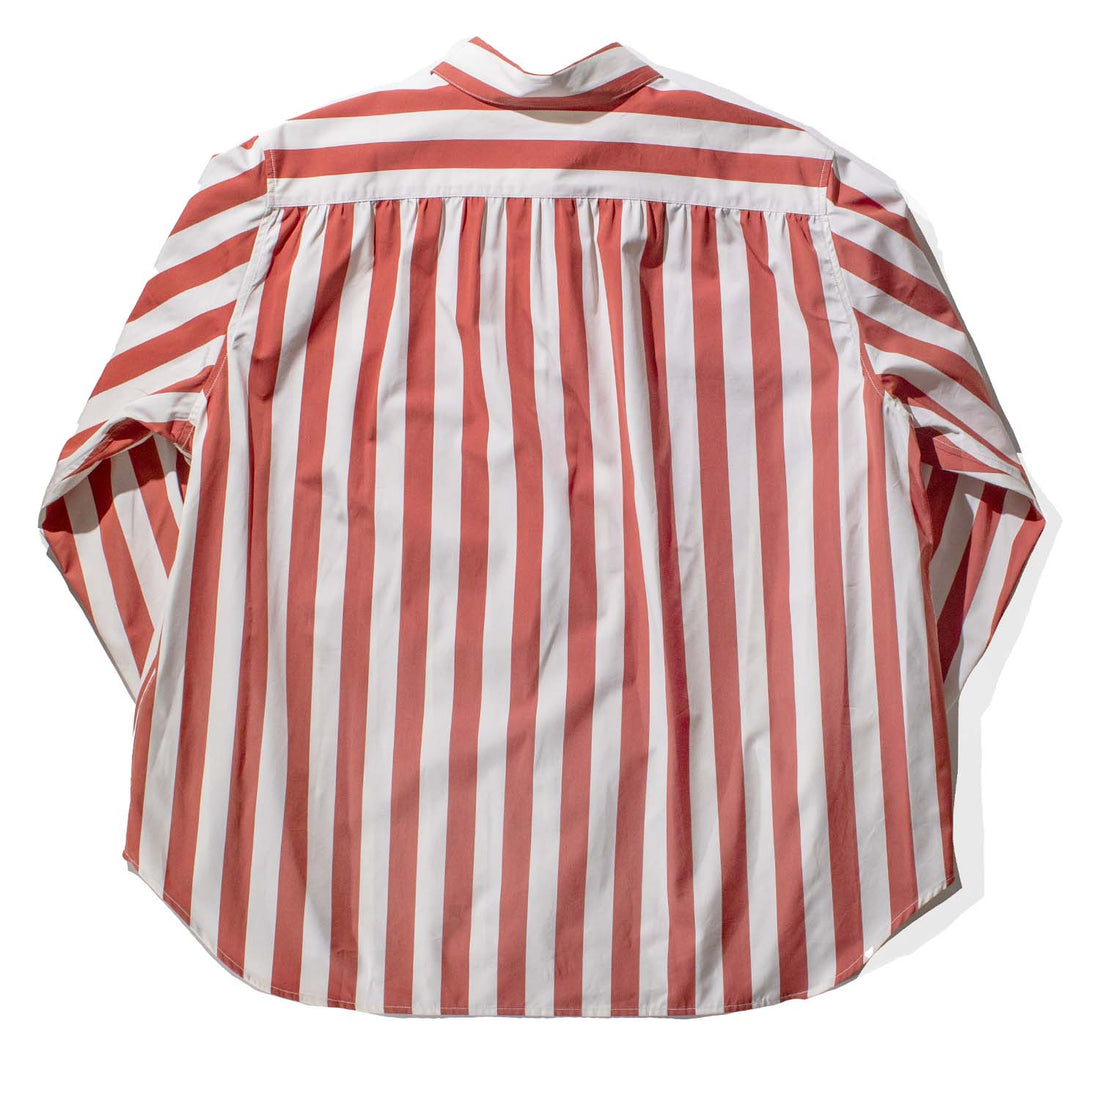 KasMaria Oversized Shirt in Red Stripe